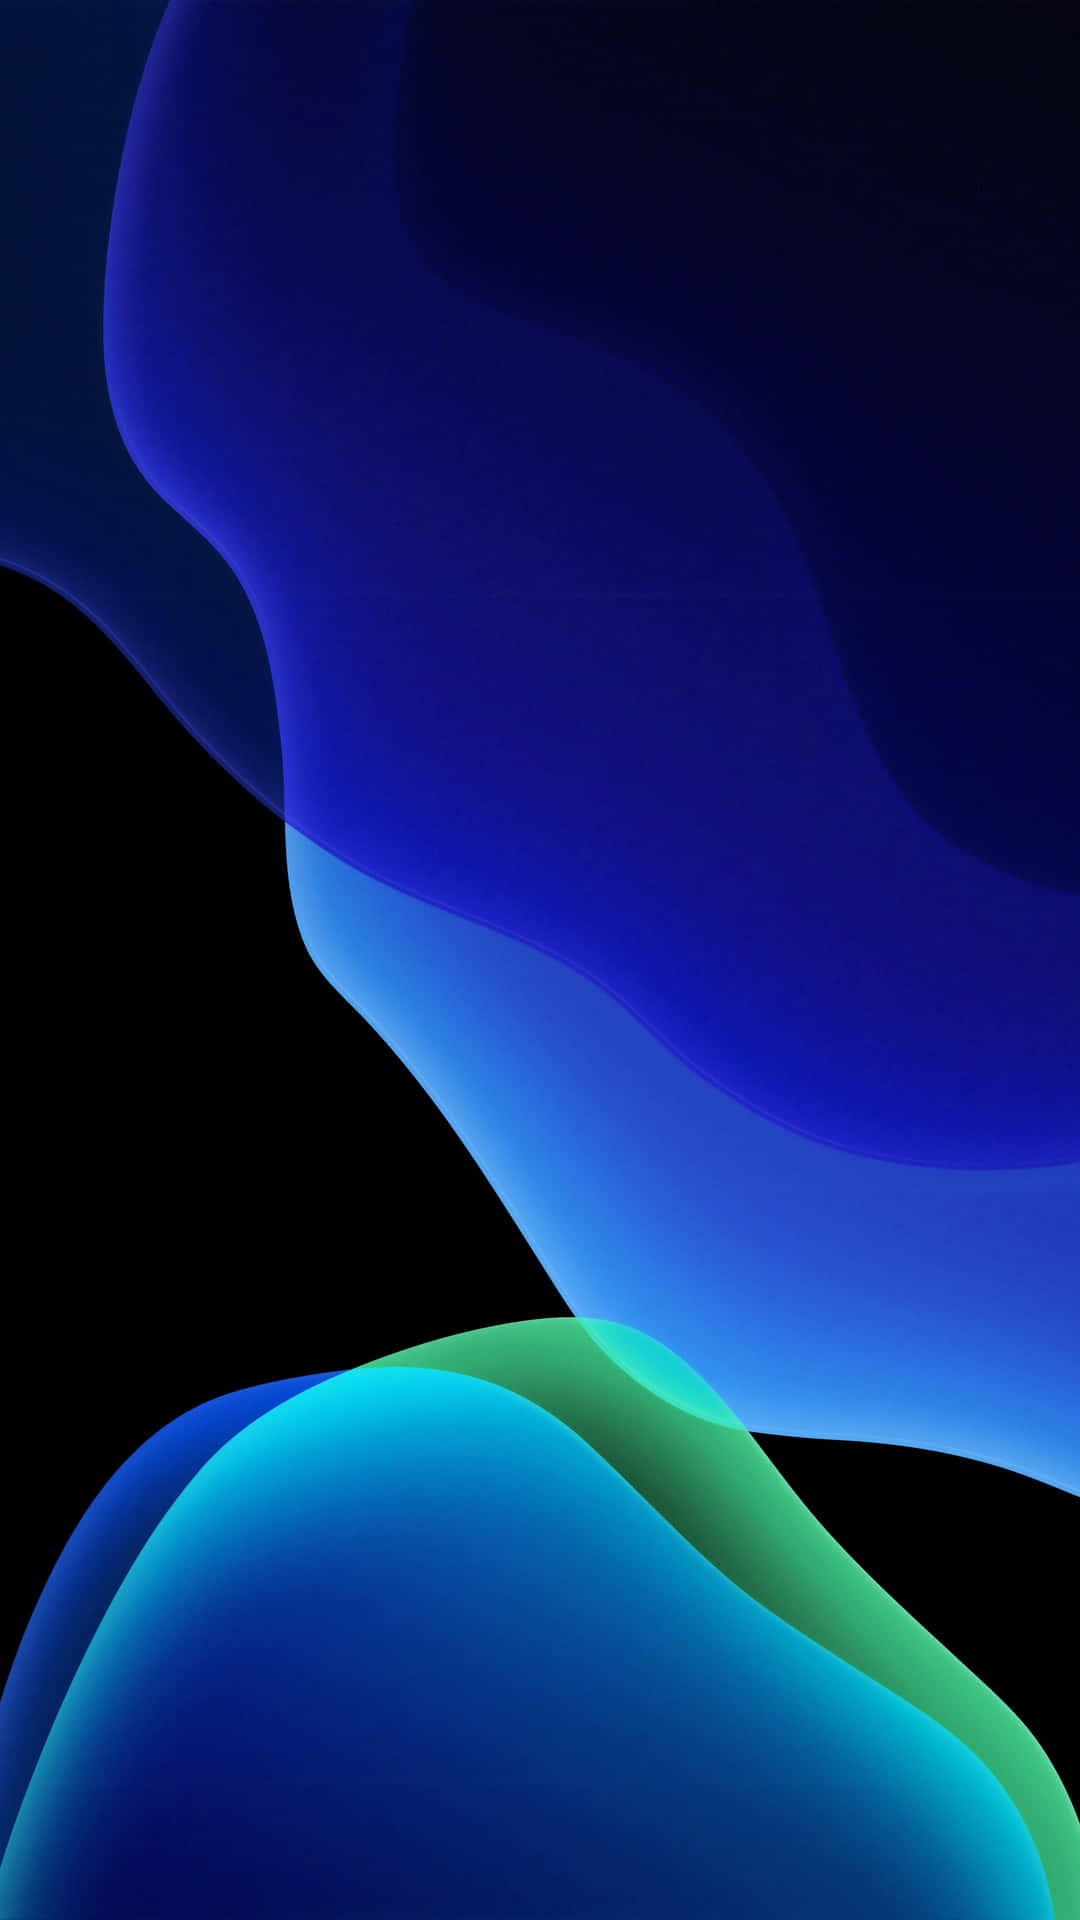 iPhone XS Max displaying an abstract blue blobs wallpaper Wallpaper